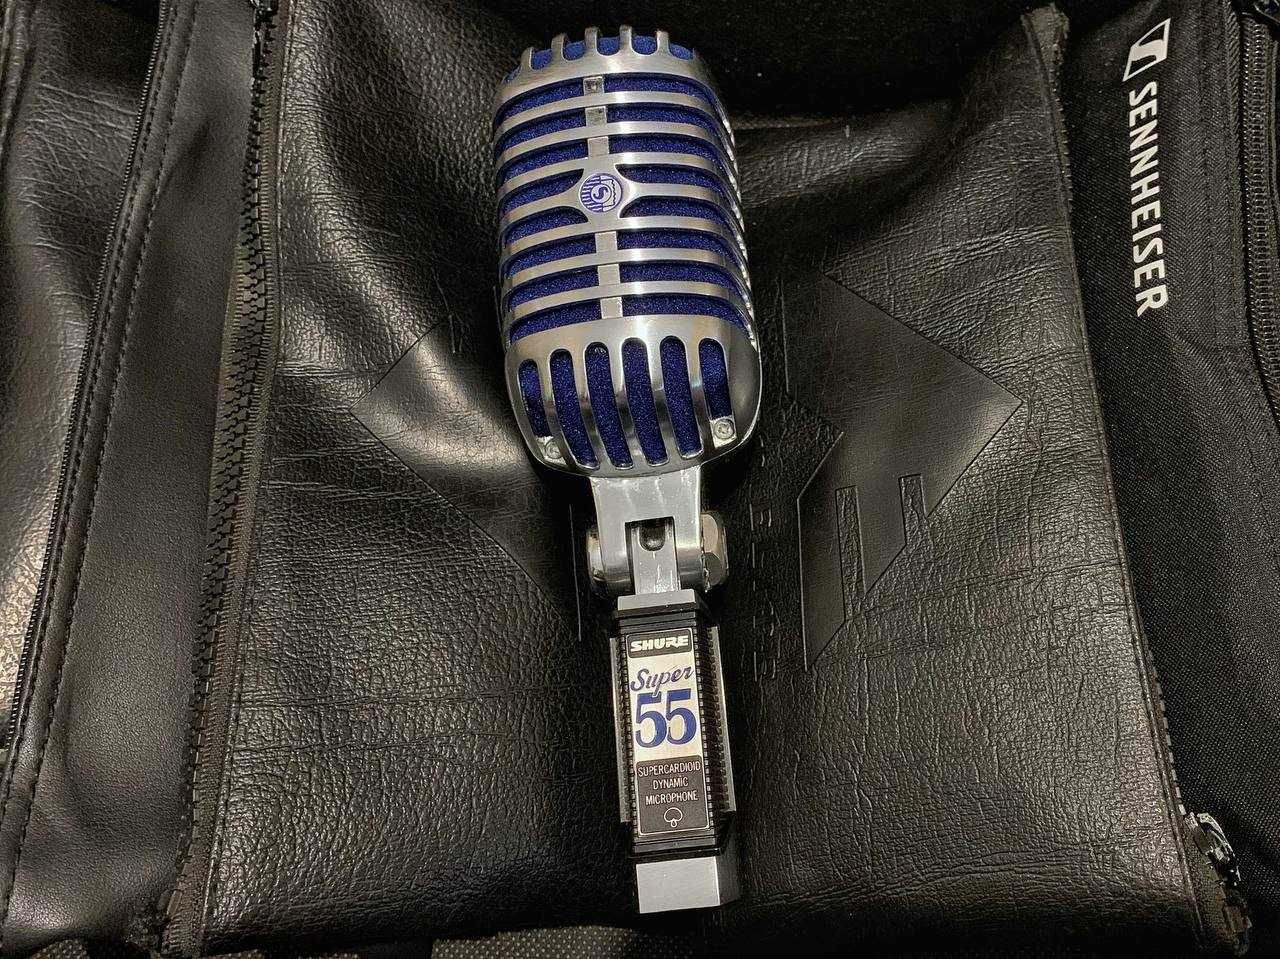 Shure 55 super supercardioid dynamic microphone